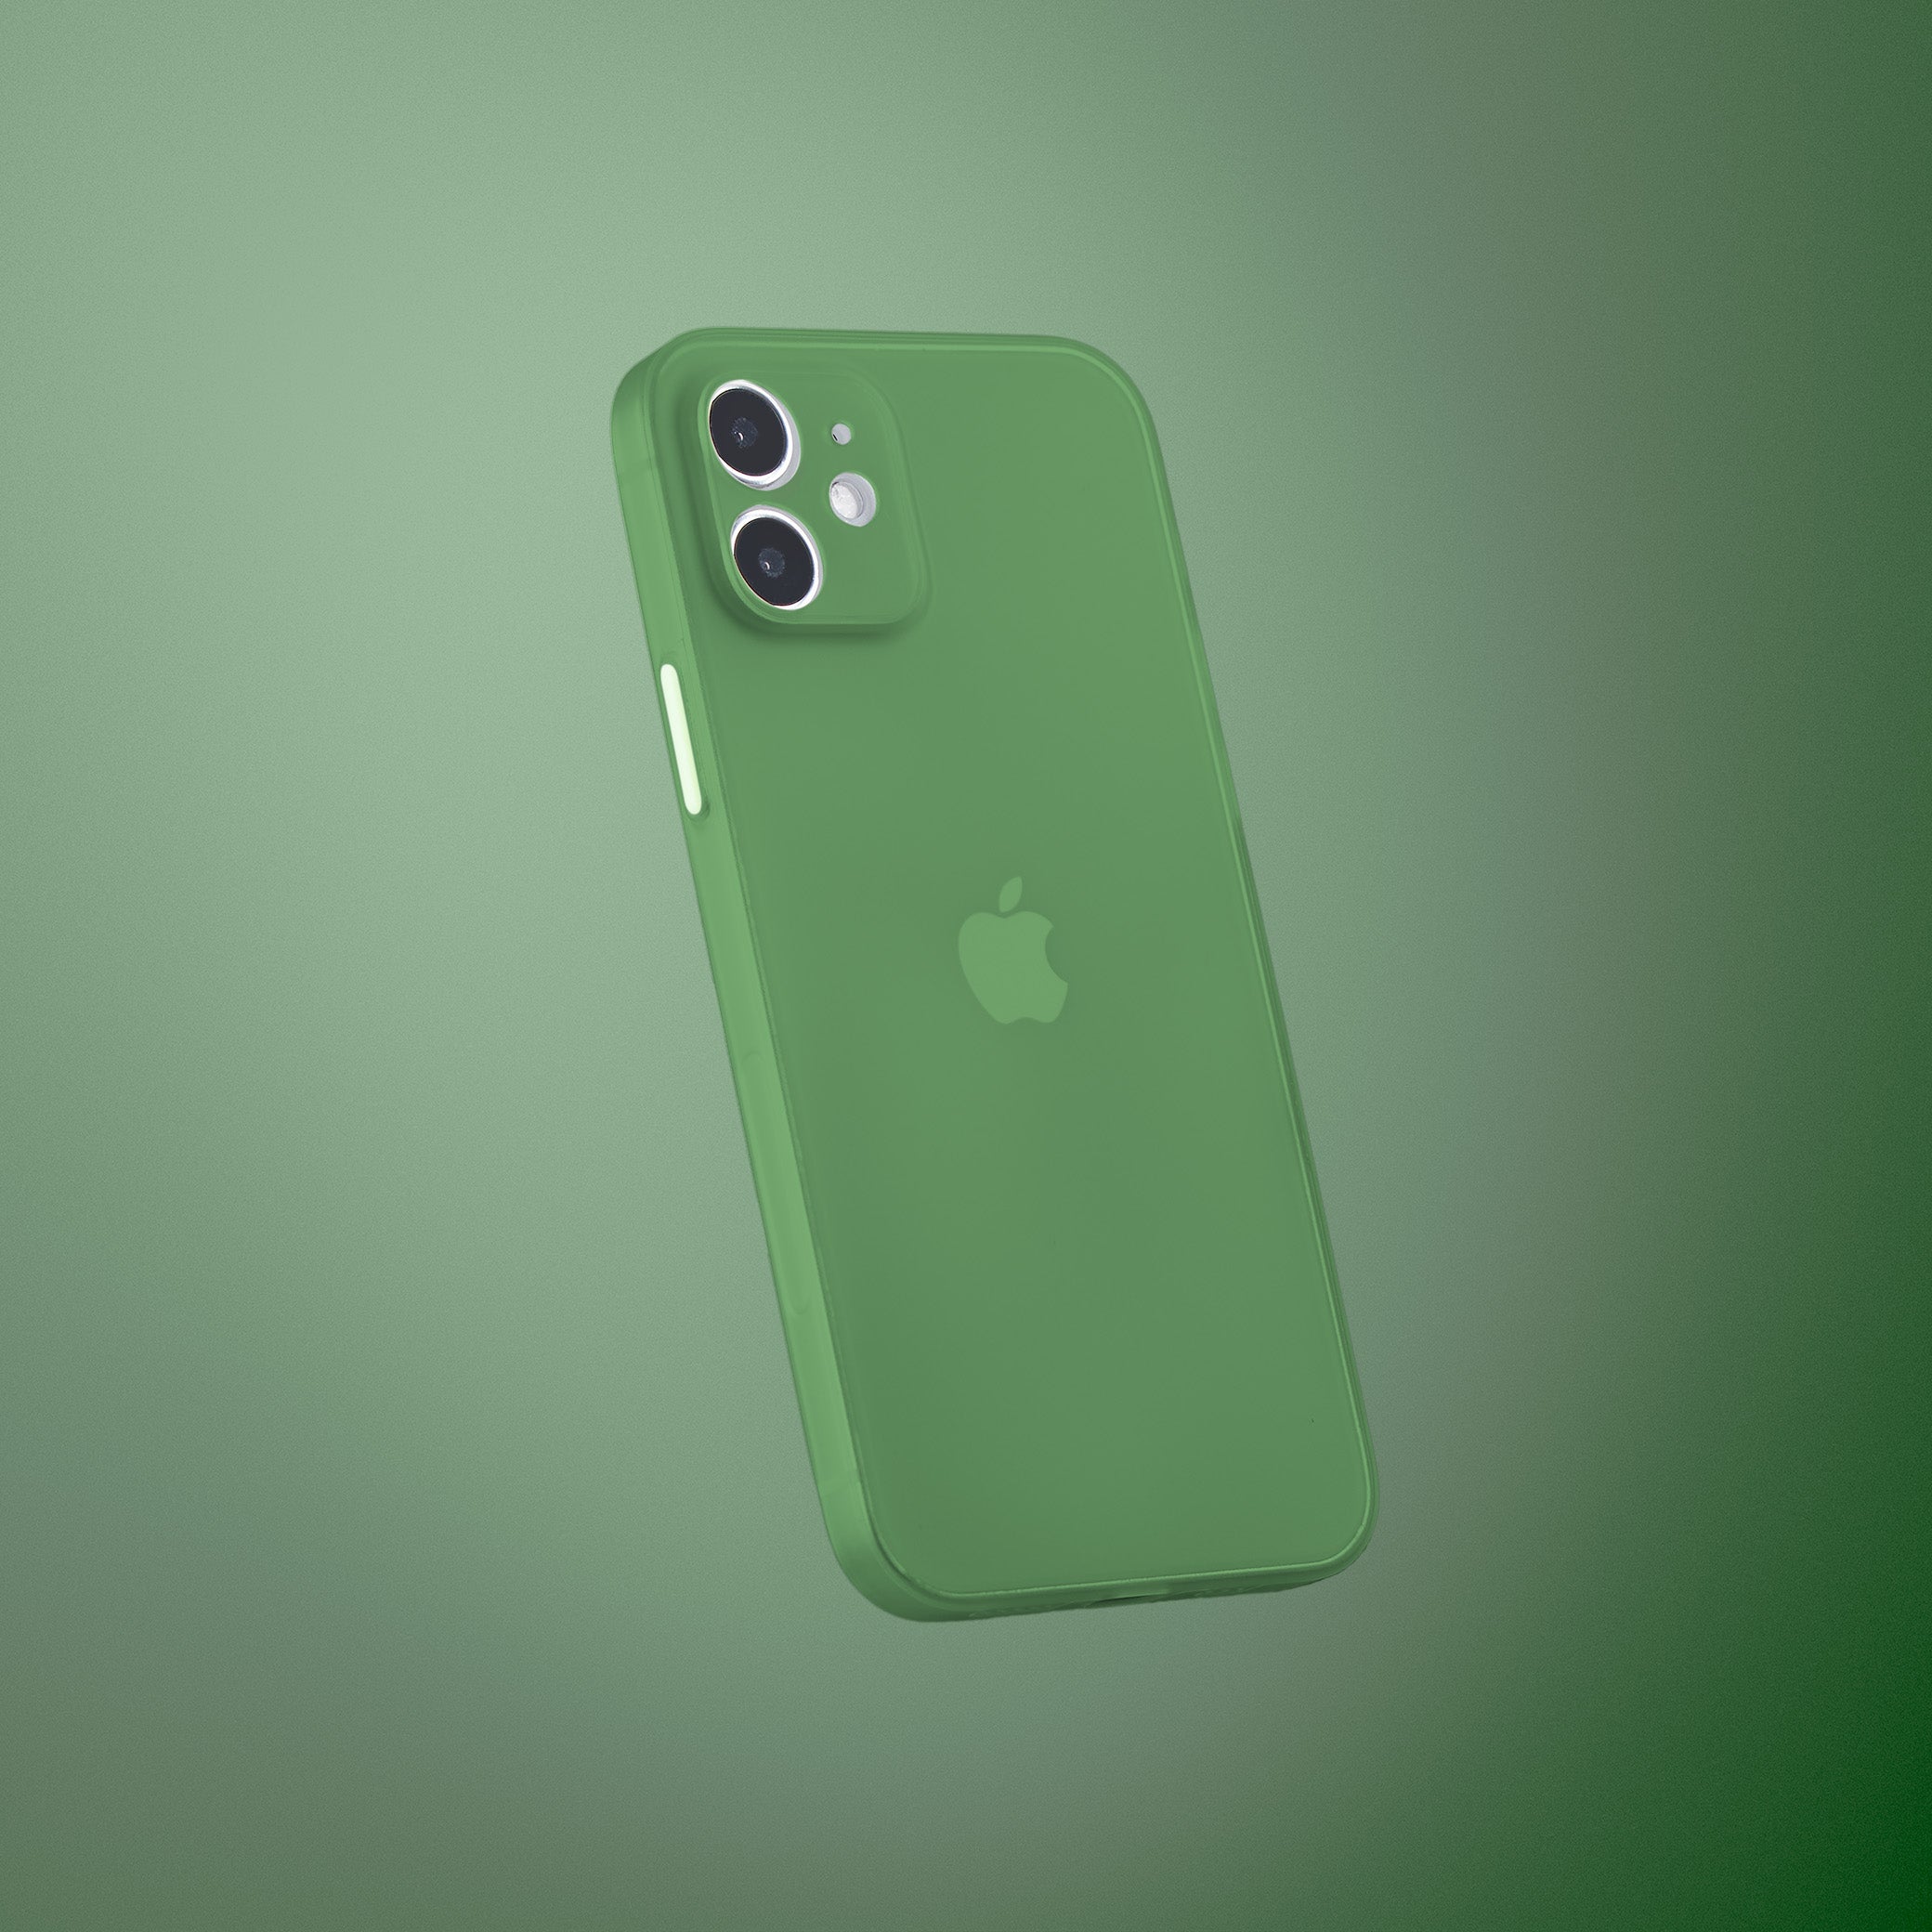 Super Slim Case 2.0 for iPhone 12 - Avacado Green